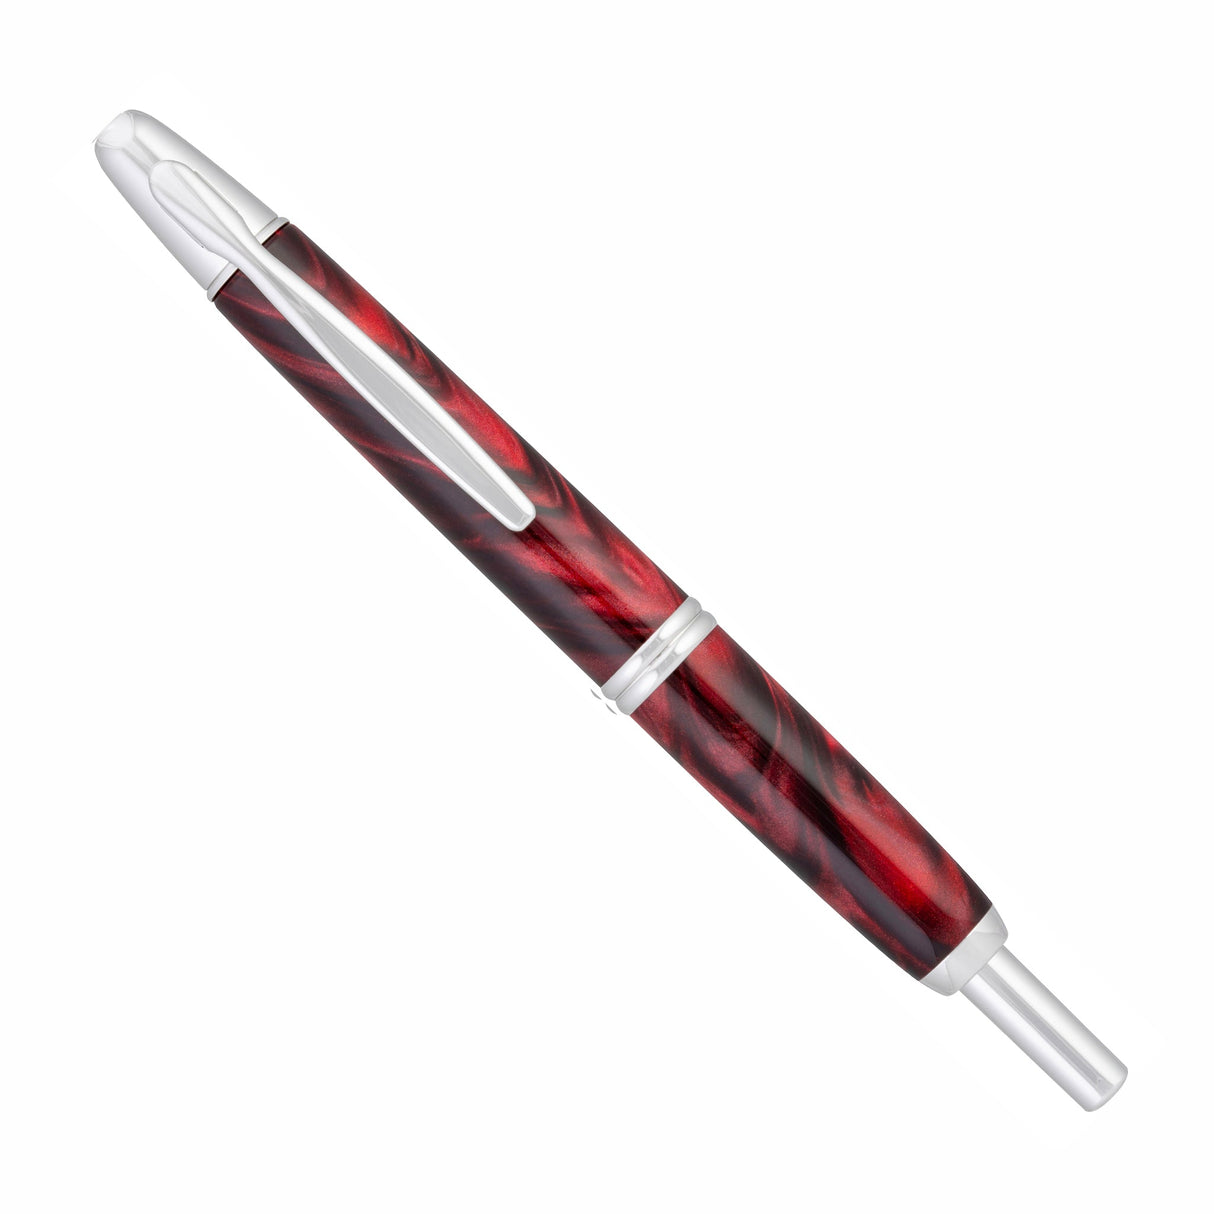 Pilot & Namiki Vanishing Point SE Marble Red - Fountain Pen